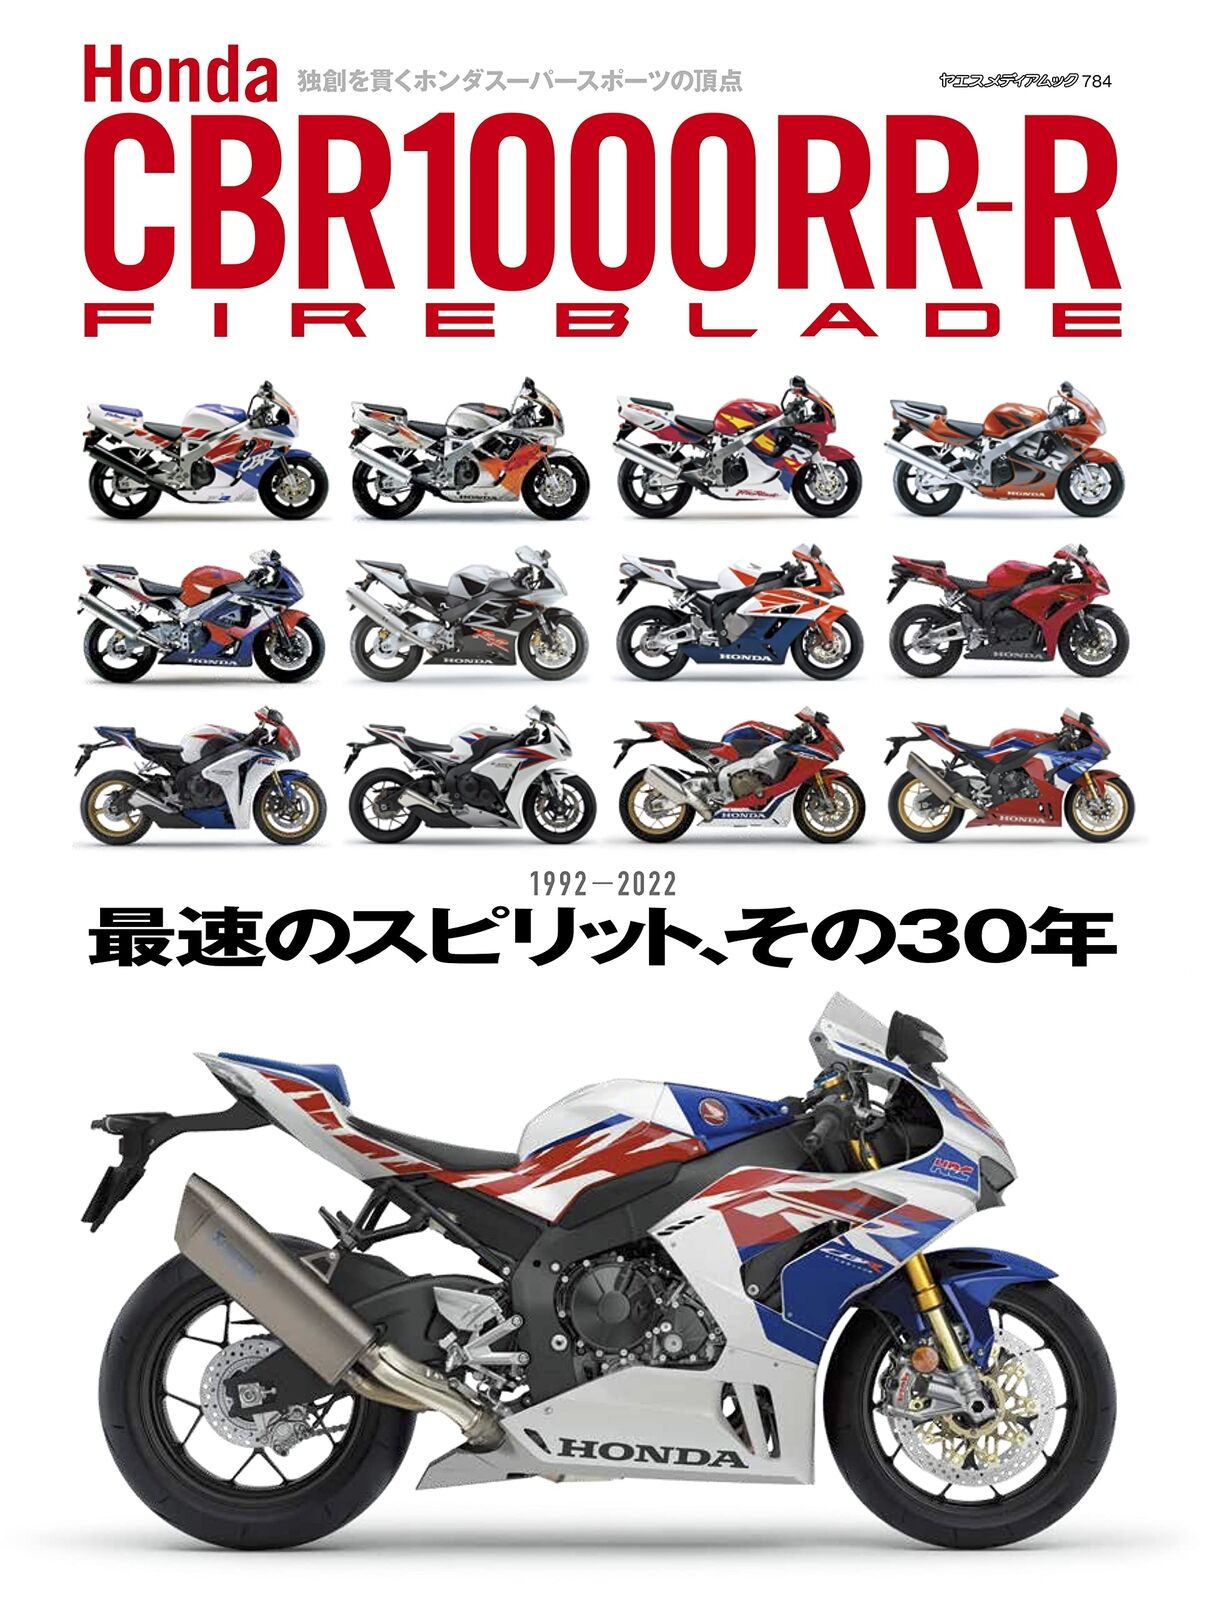 Honda CBR1000RR-R FIREBLADE book 30th Anniversary motorcycle New